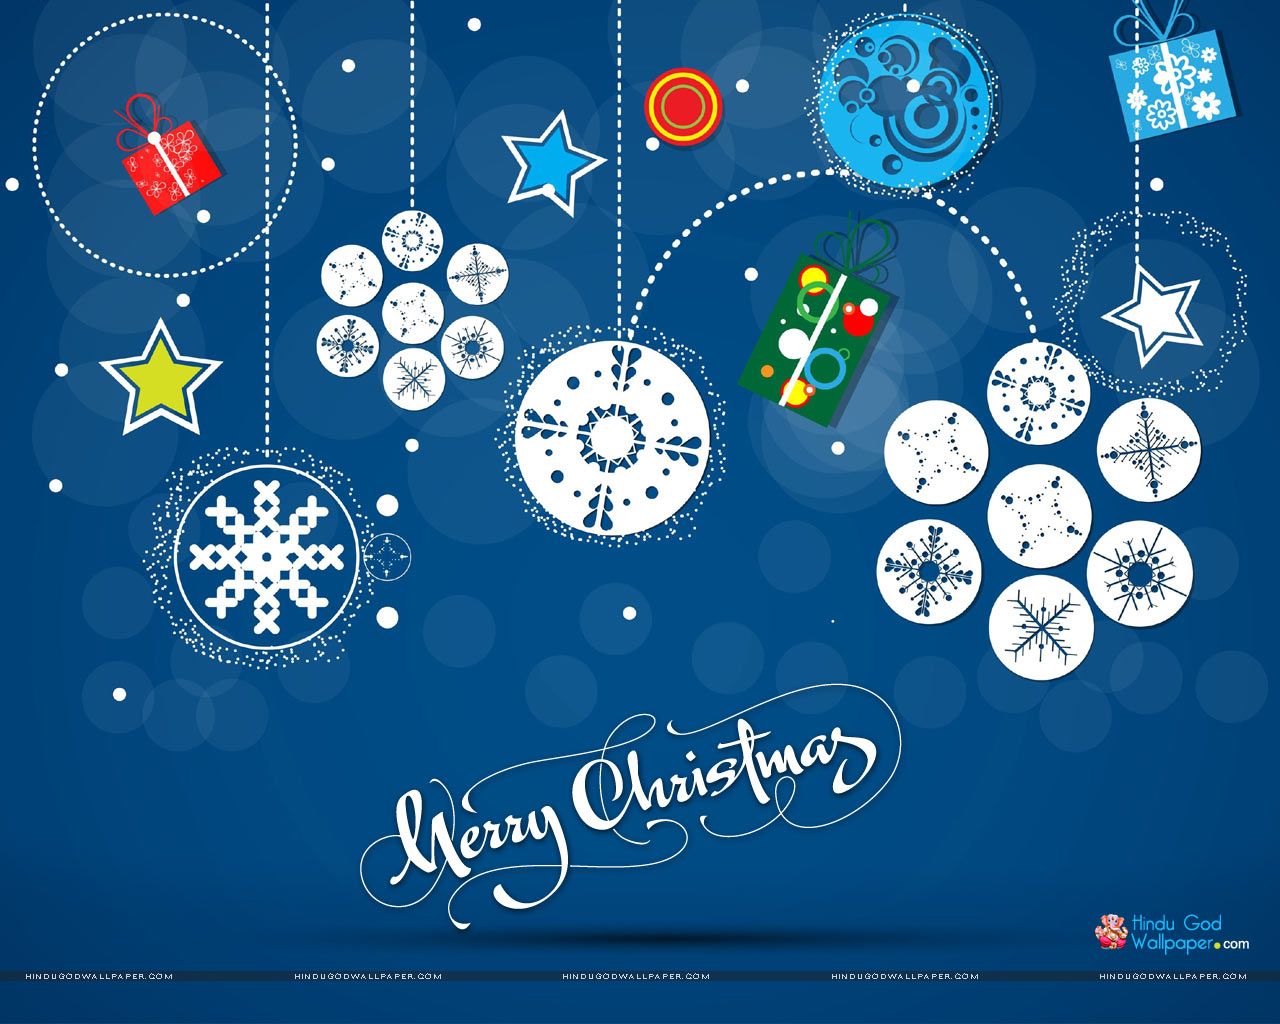 Blue Christmas Wallpaper for Desktop Download. Christmas wallpaper background, Wallpaper iphone boho, Christmas wallpaper